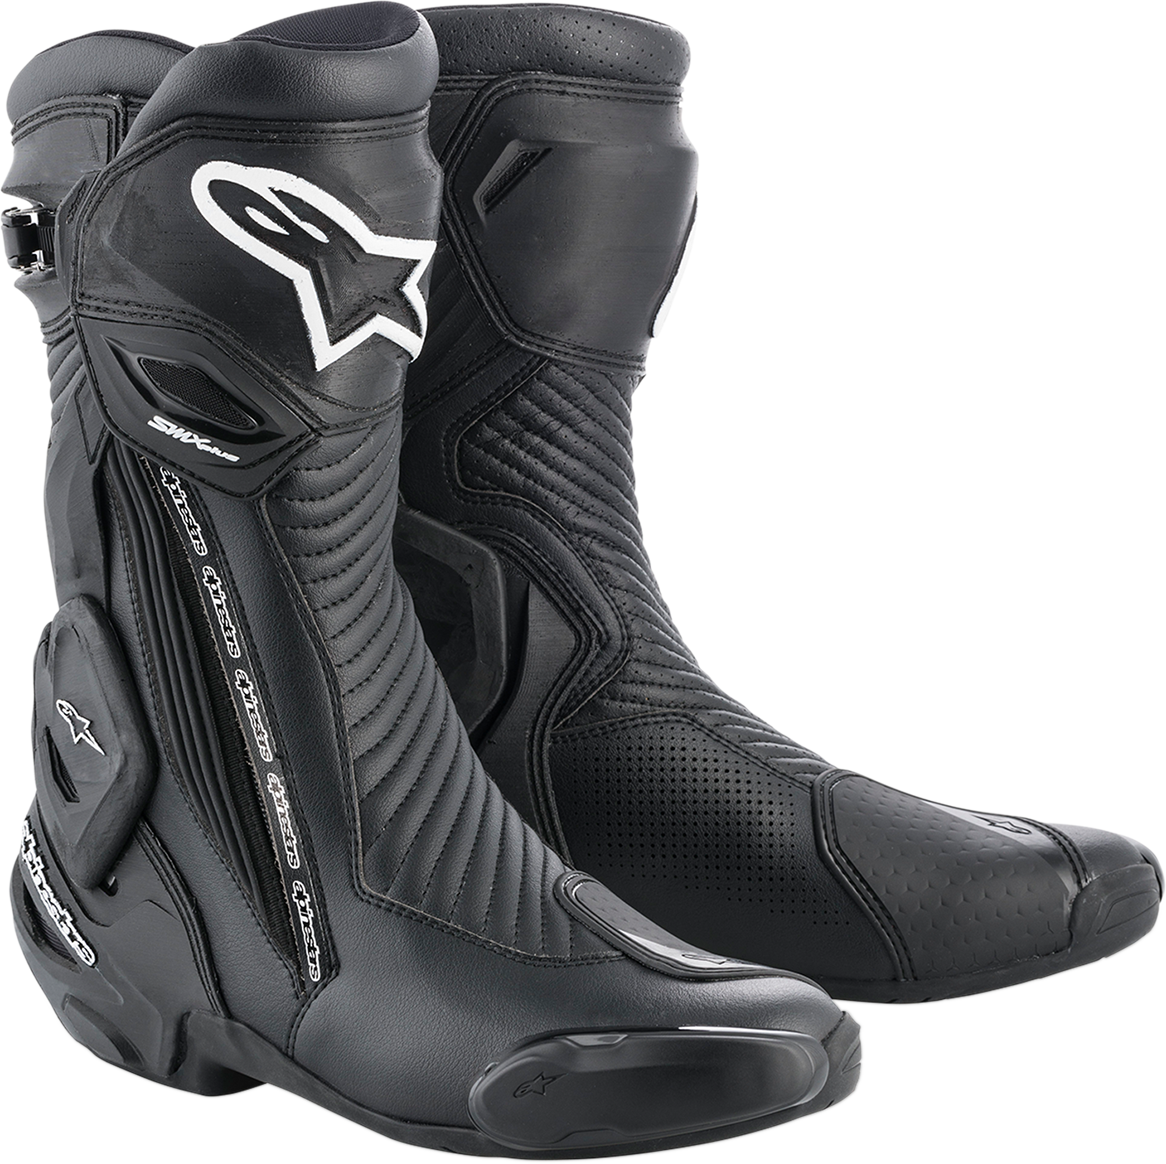 ALPINESTARS SMX+ Boots - Black - US 4 / EU 37 2221019-10-37